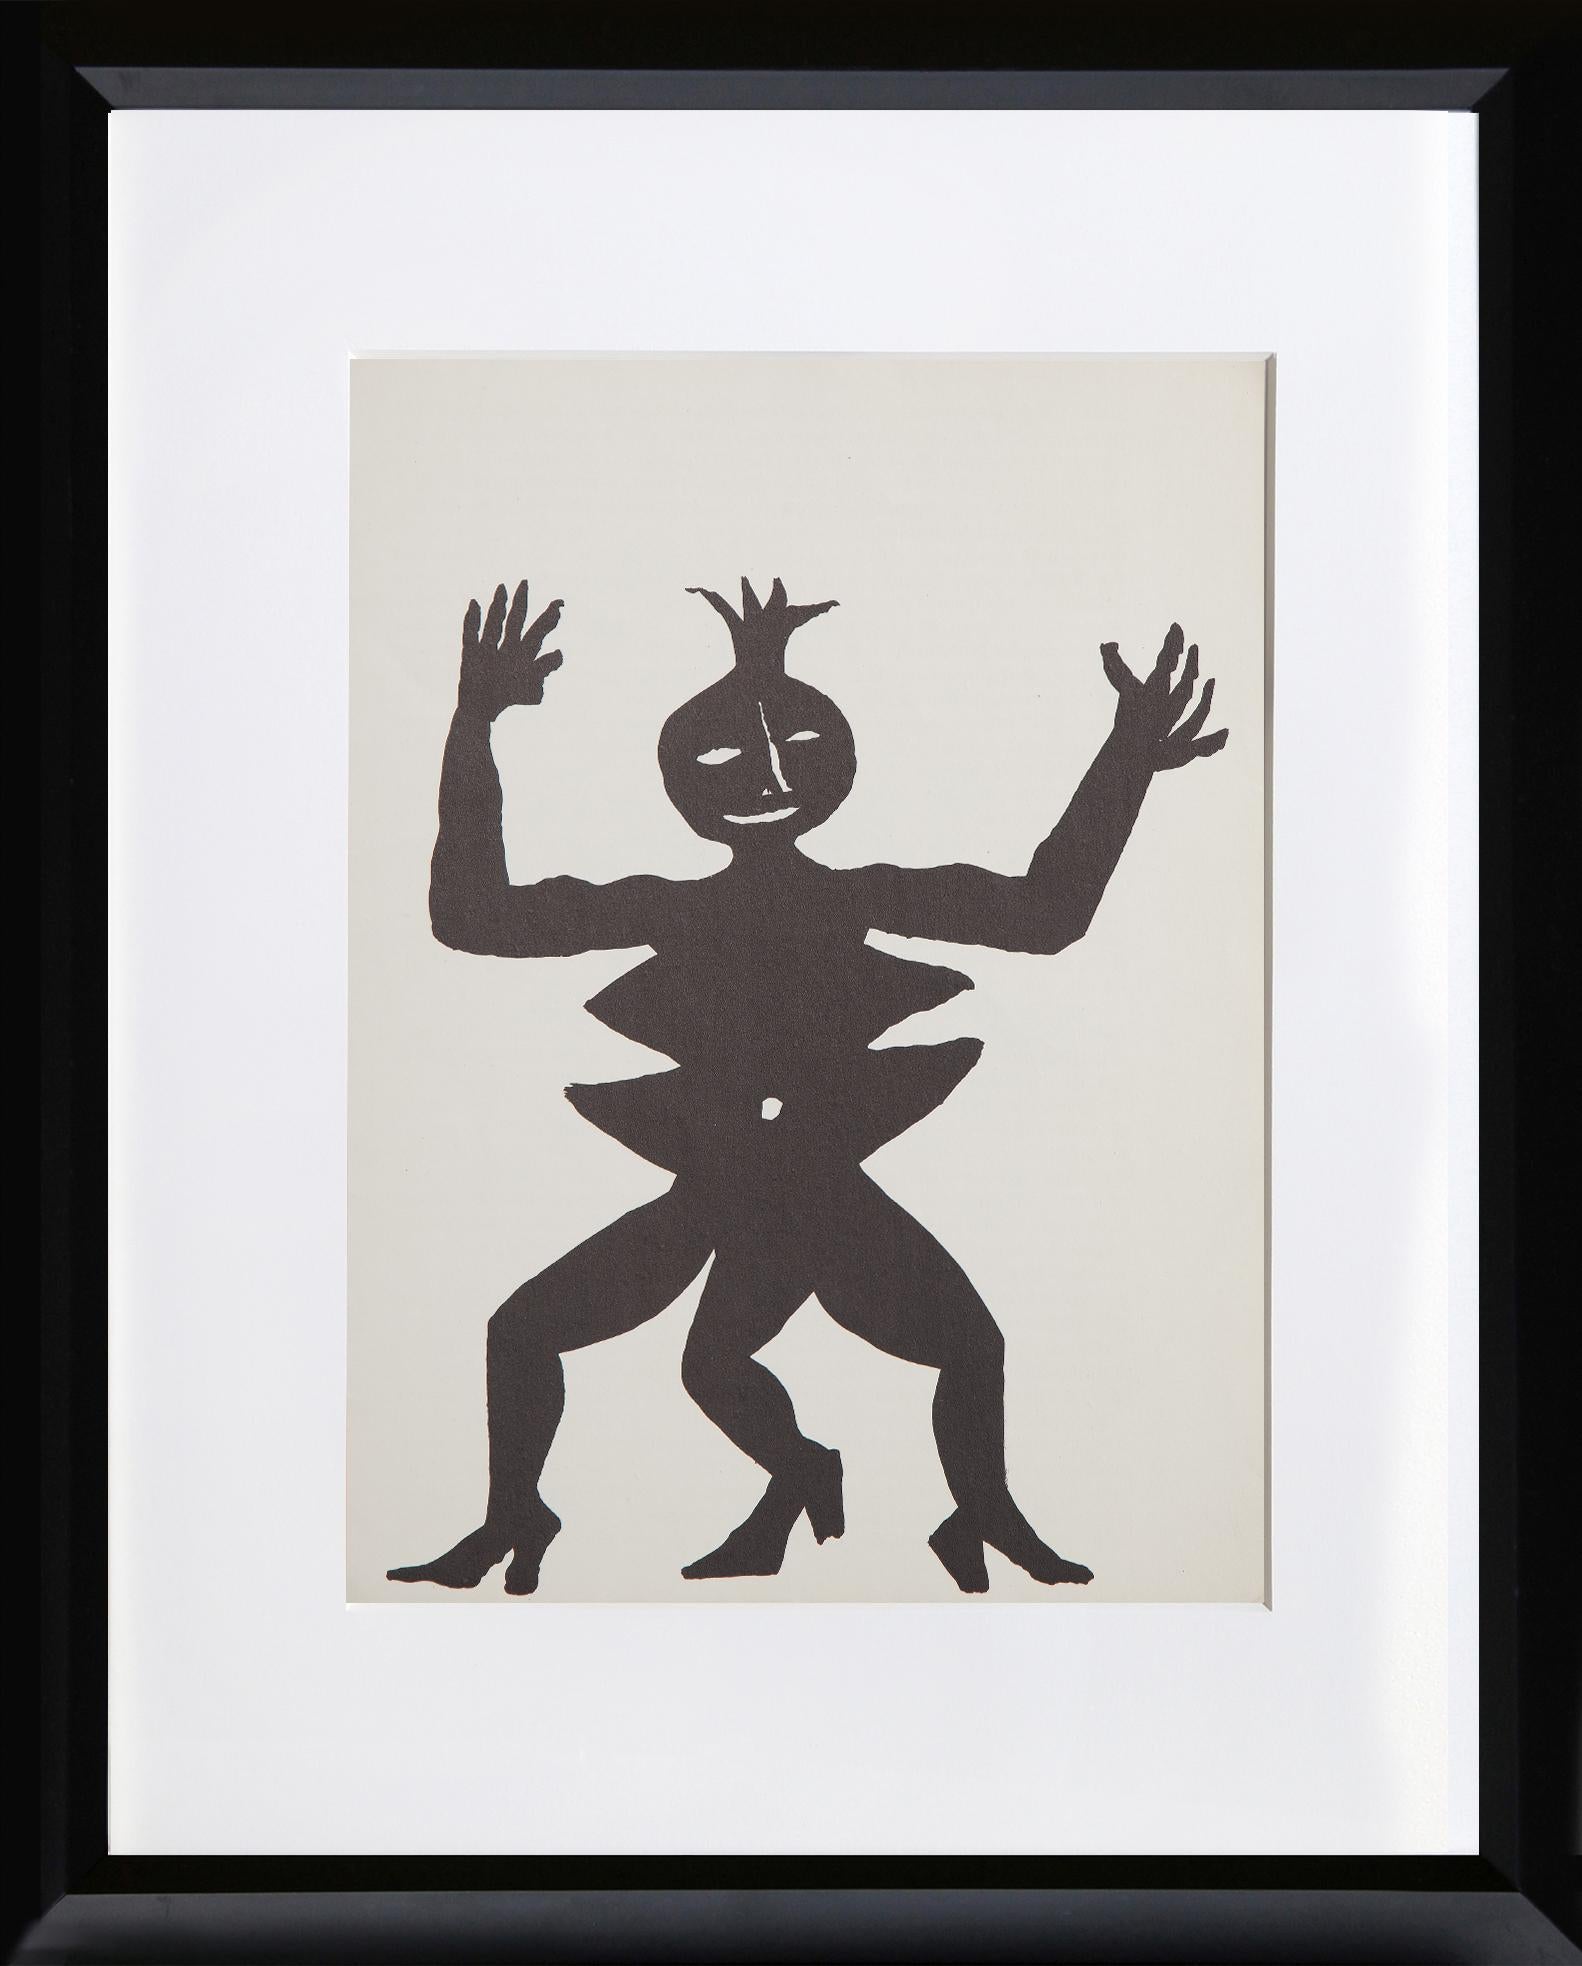 Acrobat in Heels from Derriere Le Miroir by Alexander Calder, American (1898–1976)
Date: 1975
Lithograph
Size: 15 x 11 in. (38.1 x 27.94 cm)
Printer: Maeght, Paris
Publisher: Maeght Editeur, Paris